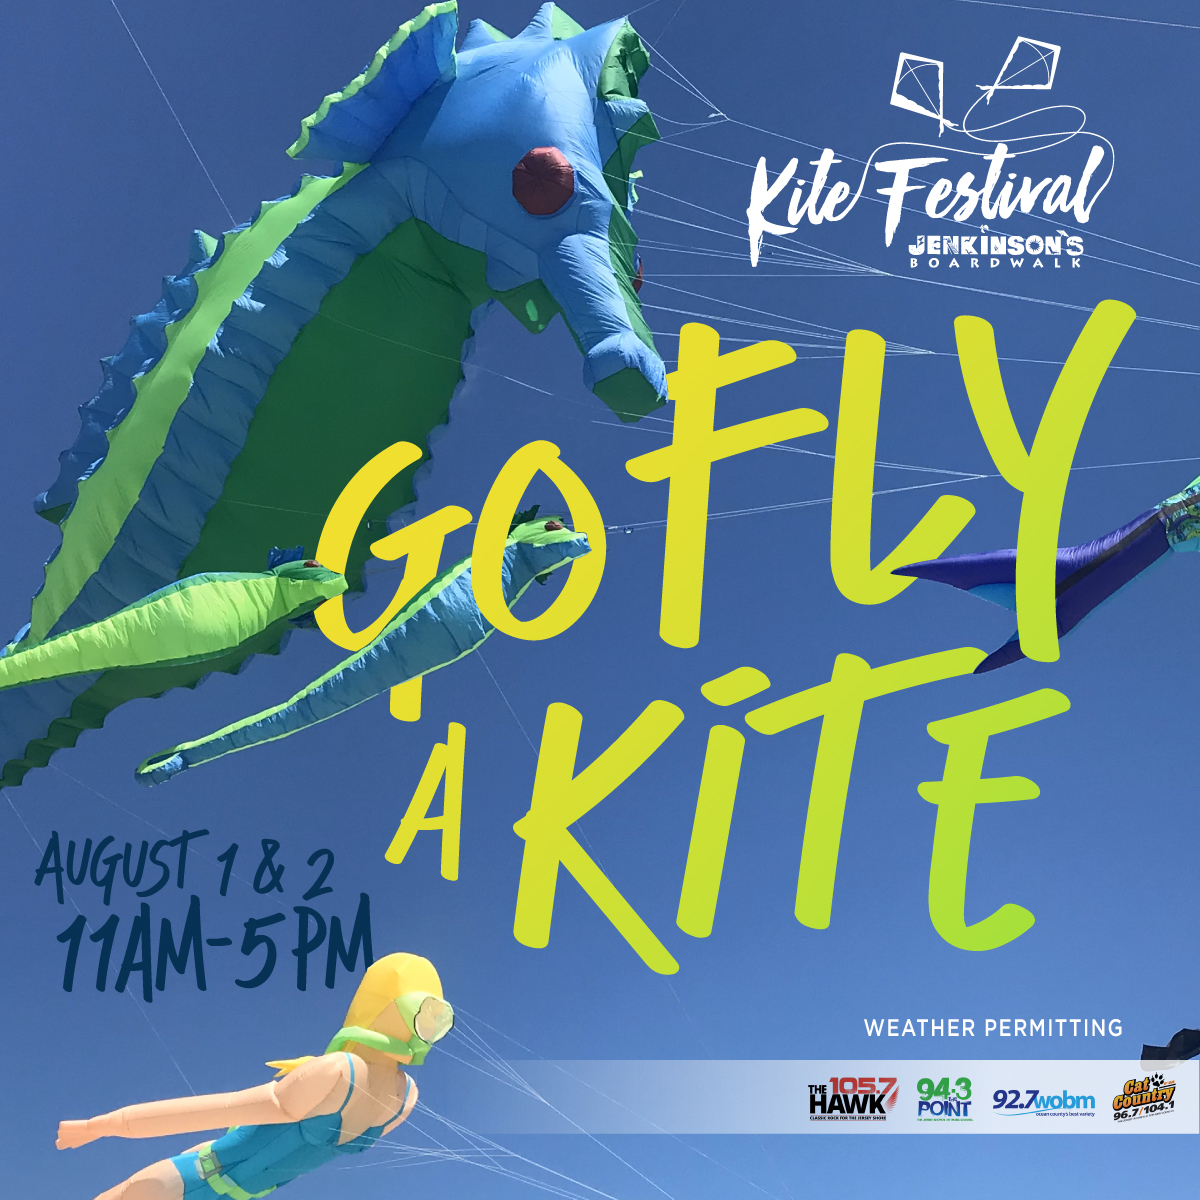 jenkinson's-kite-festival